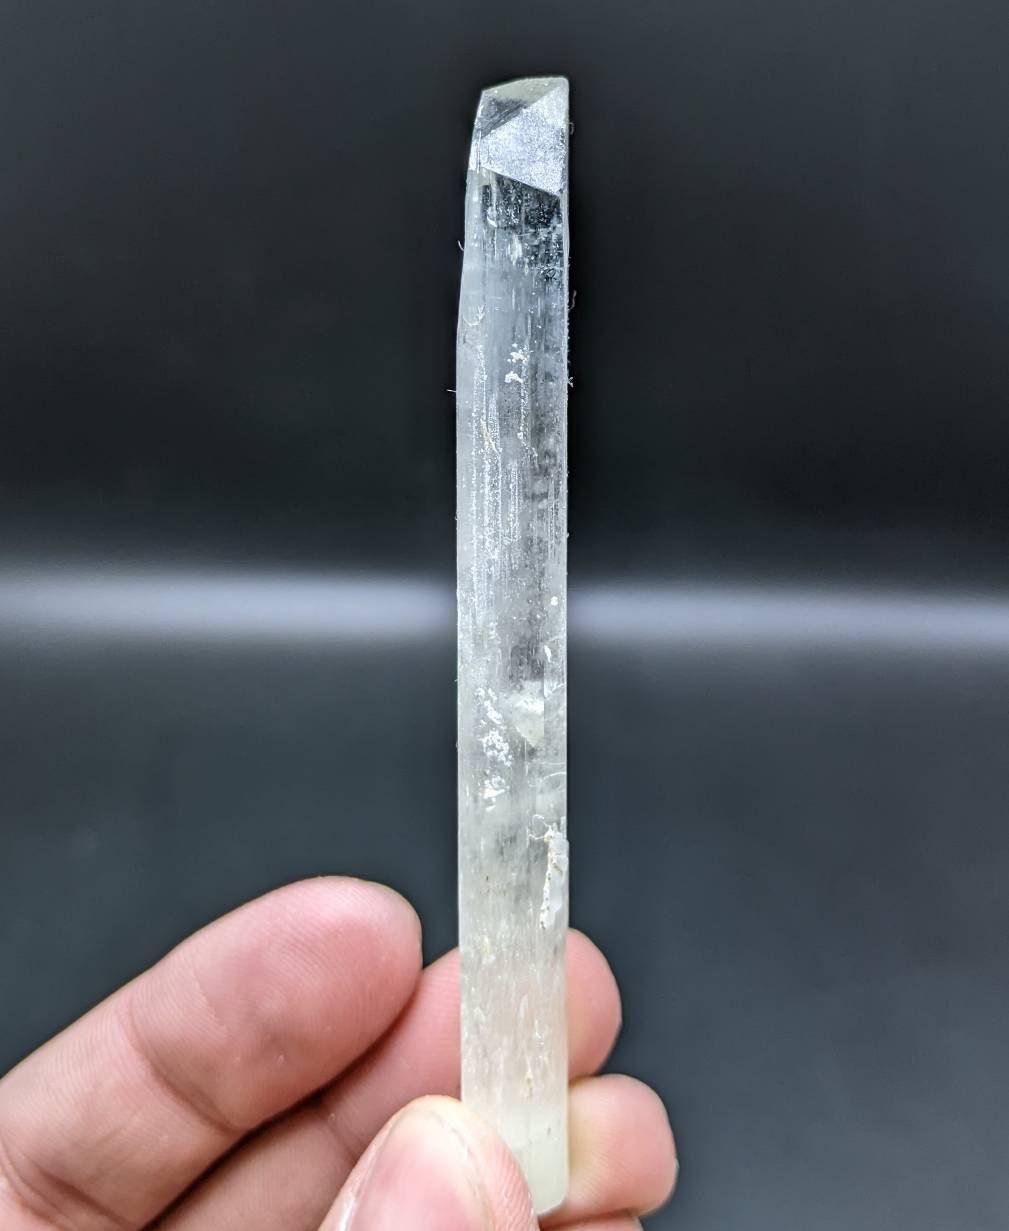 ARSAA GEMS AND MINERALSSpodumene var kunzite crystal clear gem quality lustrous from Laghman, Afghanistan, 30 grams - Premium  from ARSAA GEMS AND MINERALS - Just $100.00! Shop now at ARSAA GEMS AND MINERALS